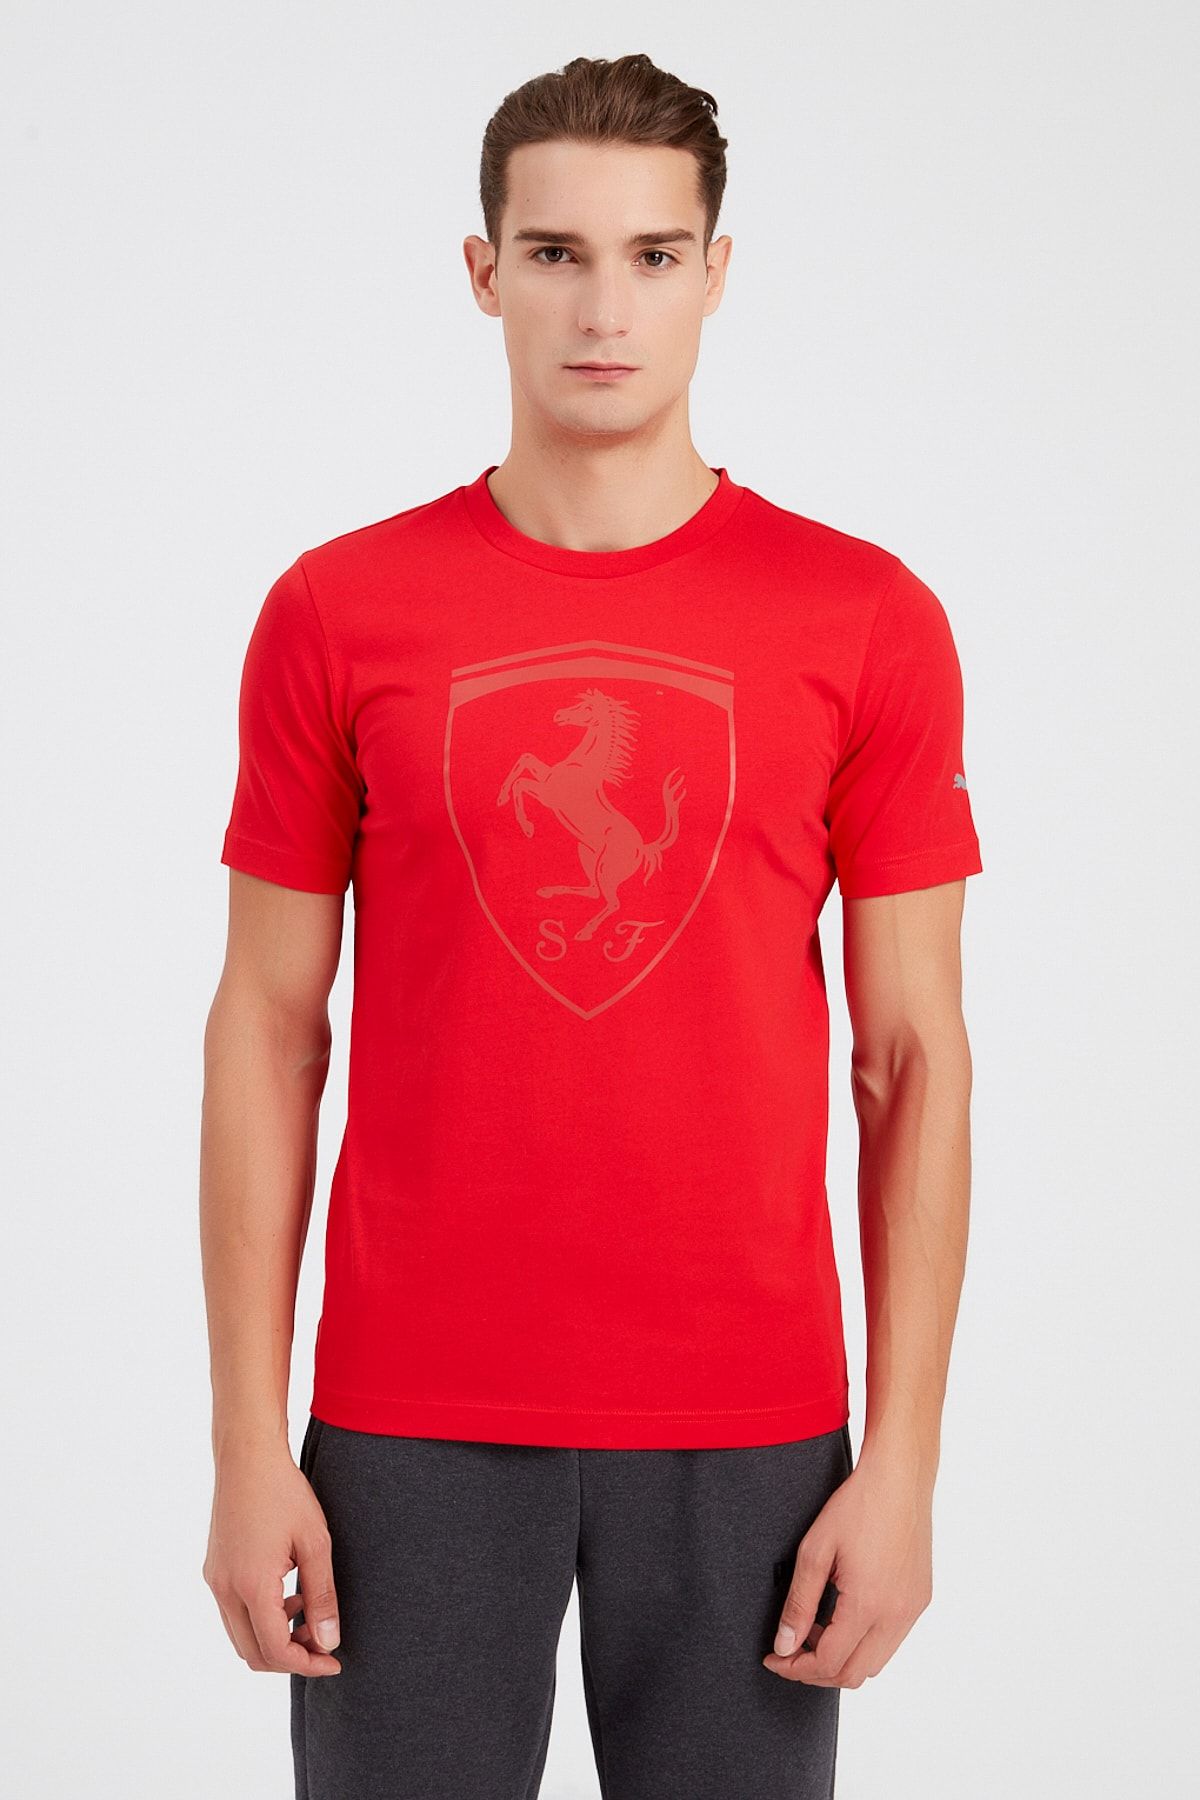 Puma FERRARI STYLE BIG SHIELDT Kırmızı Erkek T-Shirt 100662705